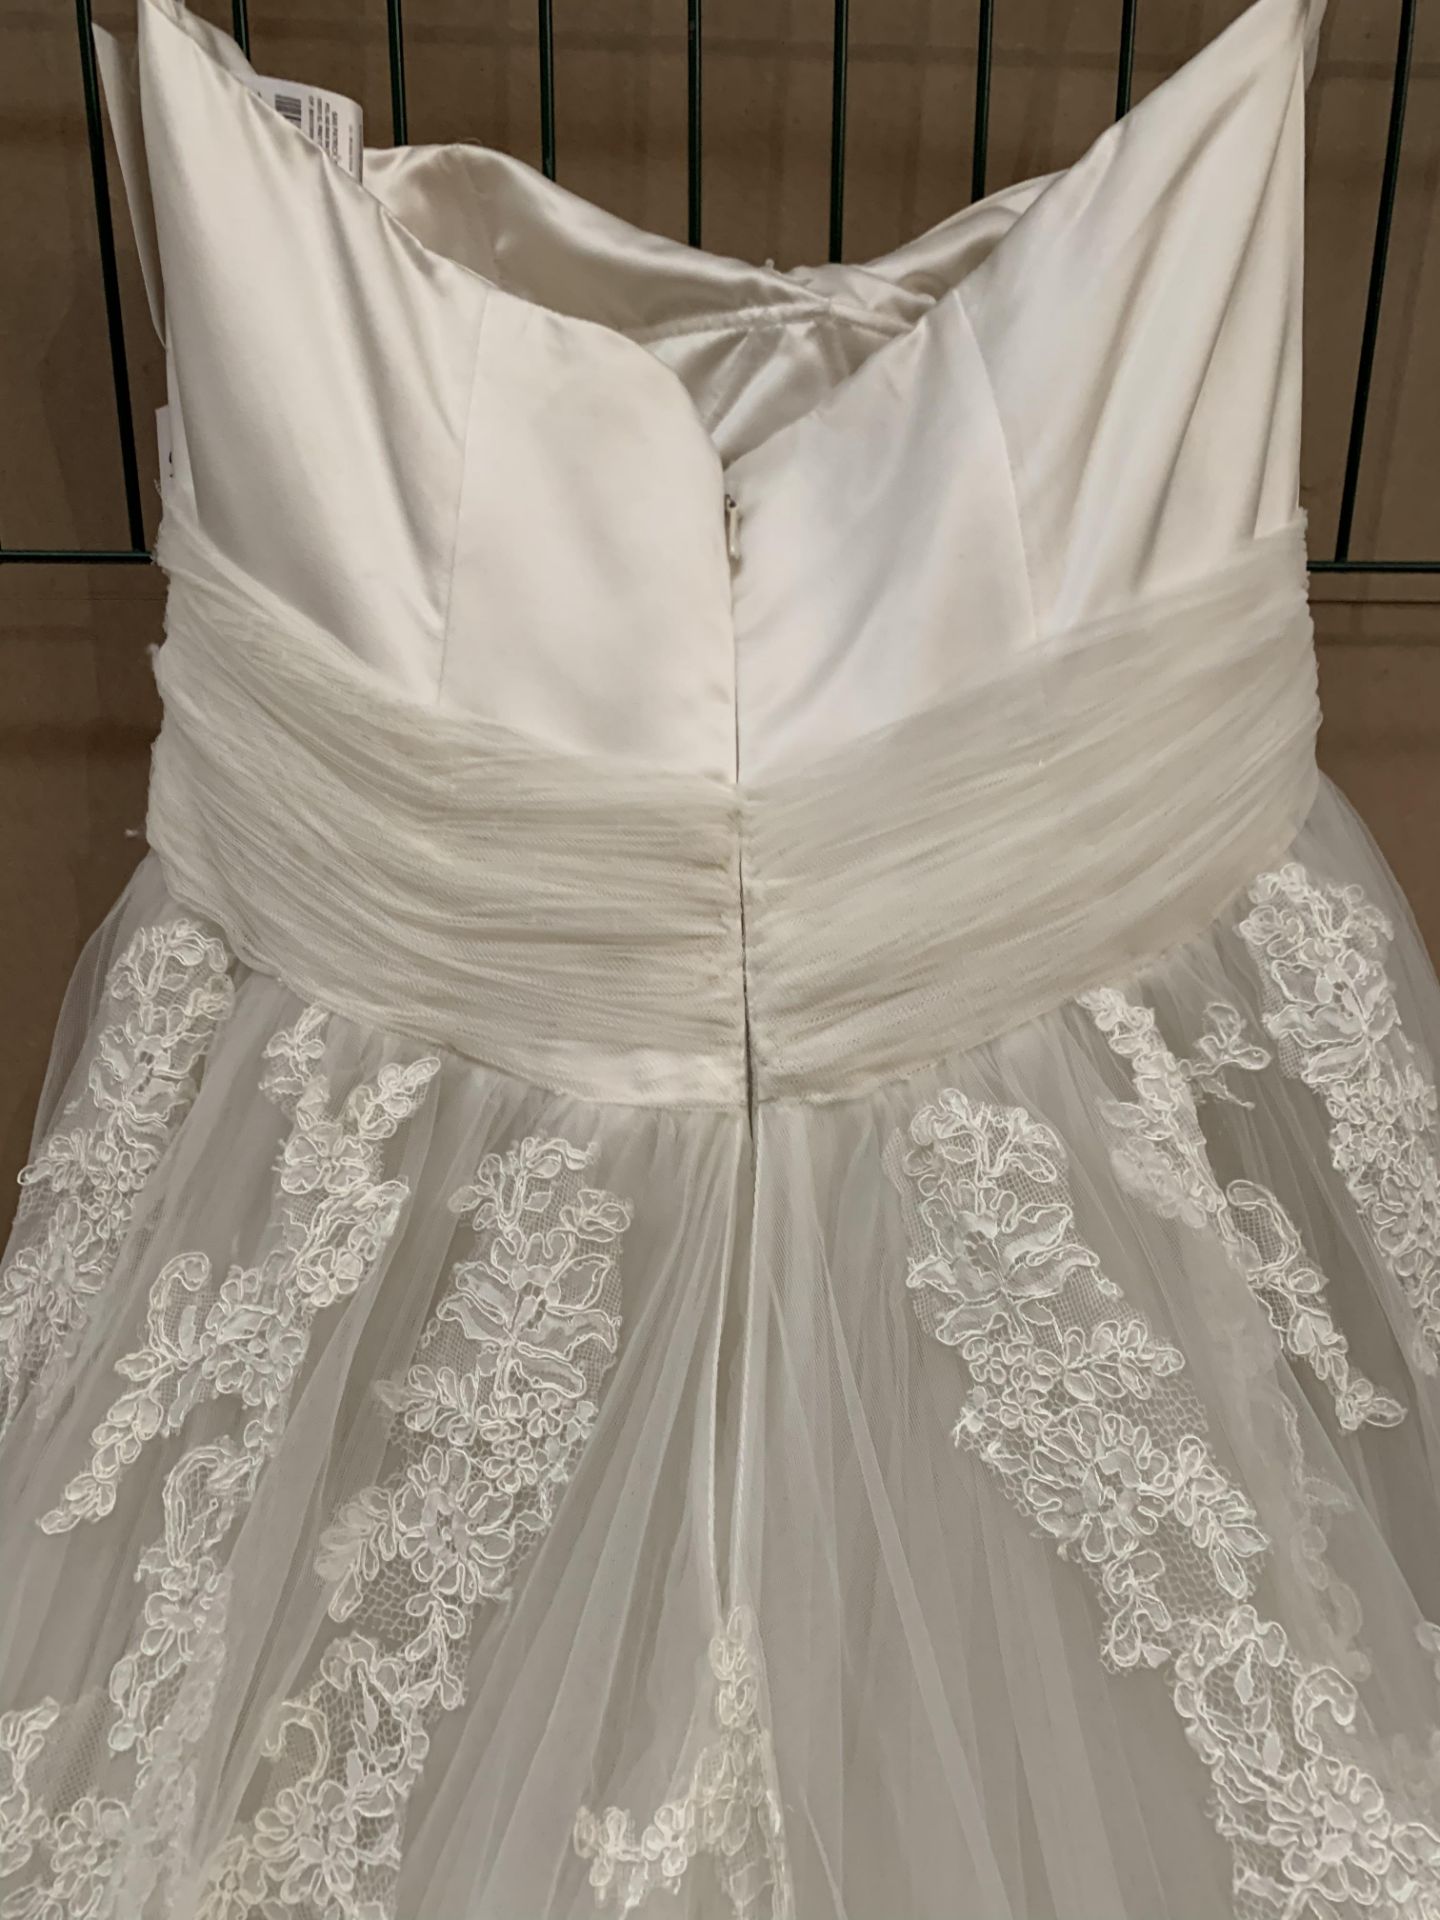 A wedding dress by San Patrick, ivory, size 14, - Image 3 of 4